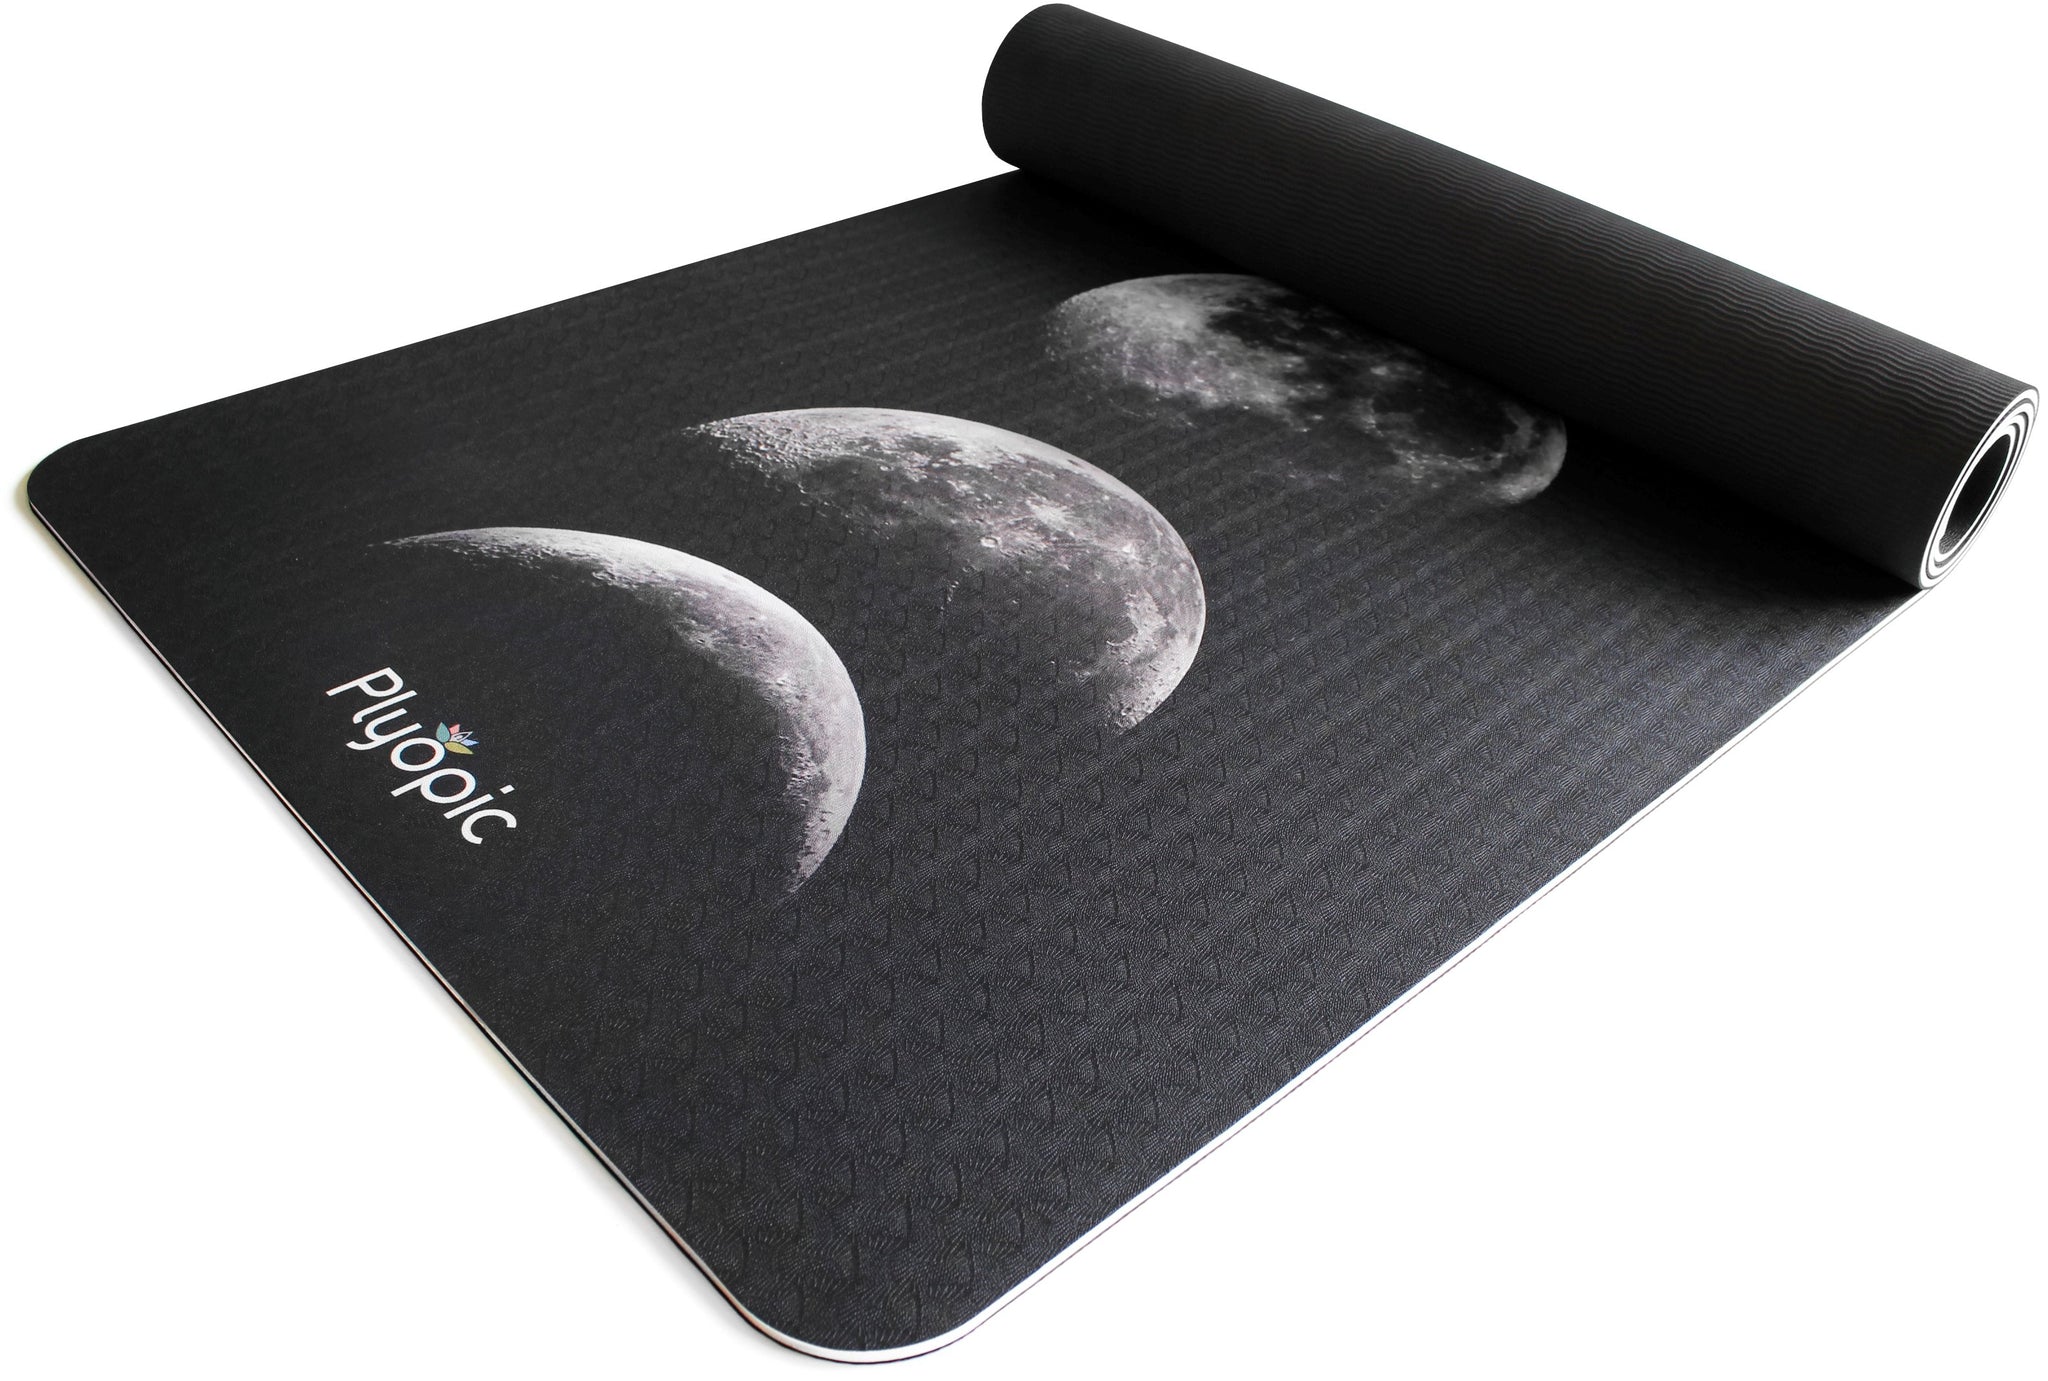 Plyopic-Printed Yoga, Pilates & Exercise Mat - Moon Phases-Yoga Mat